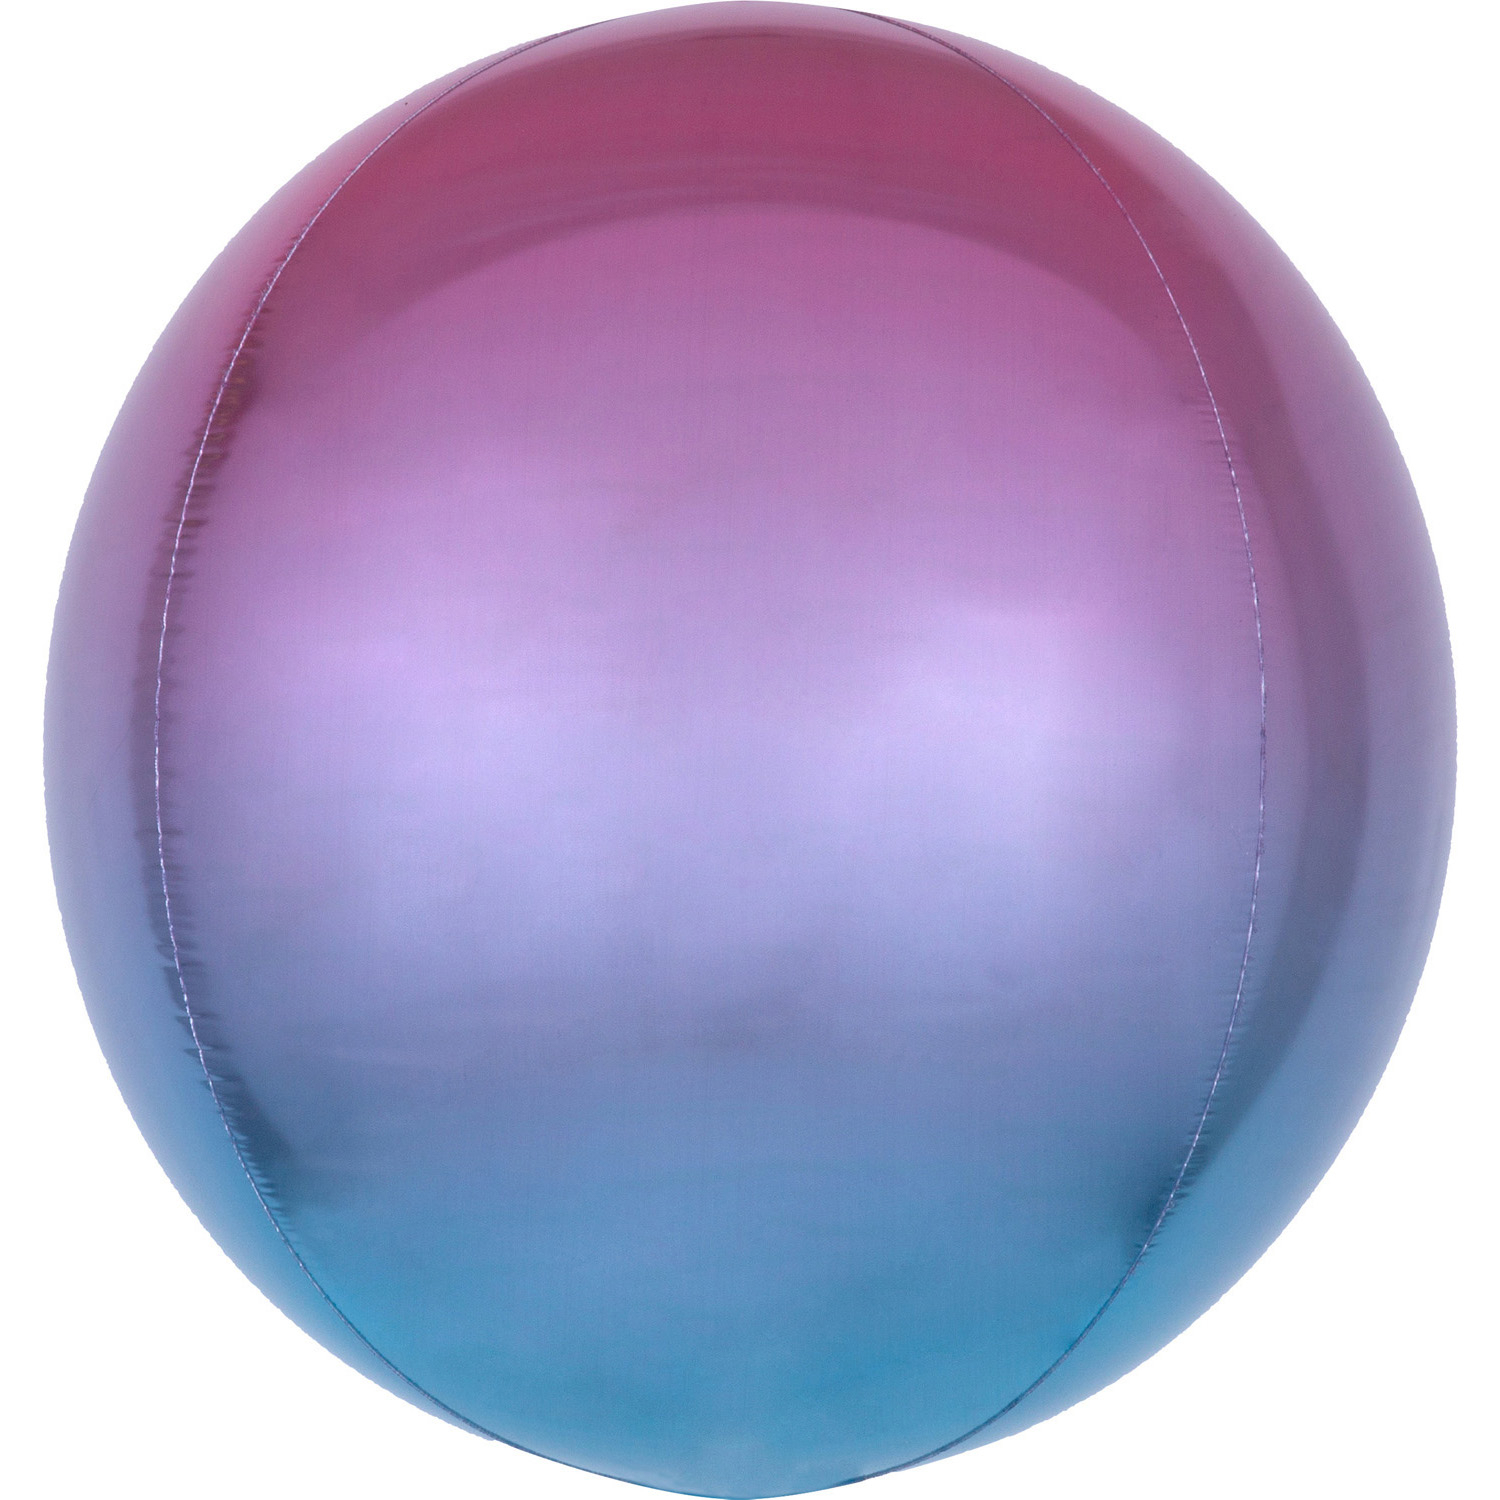 Ombre purple-blue foil balloon - sphere